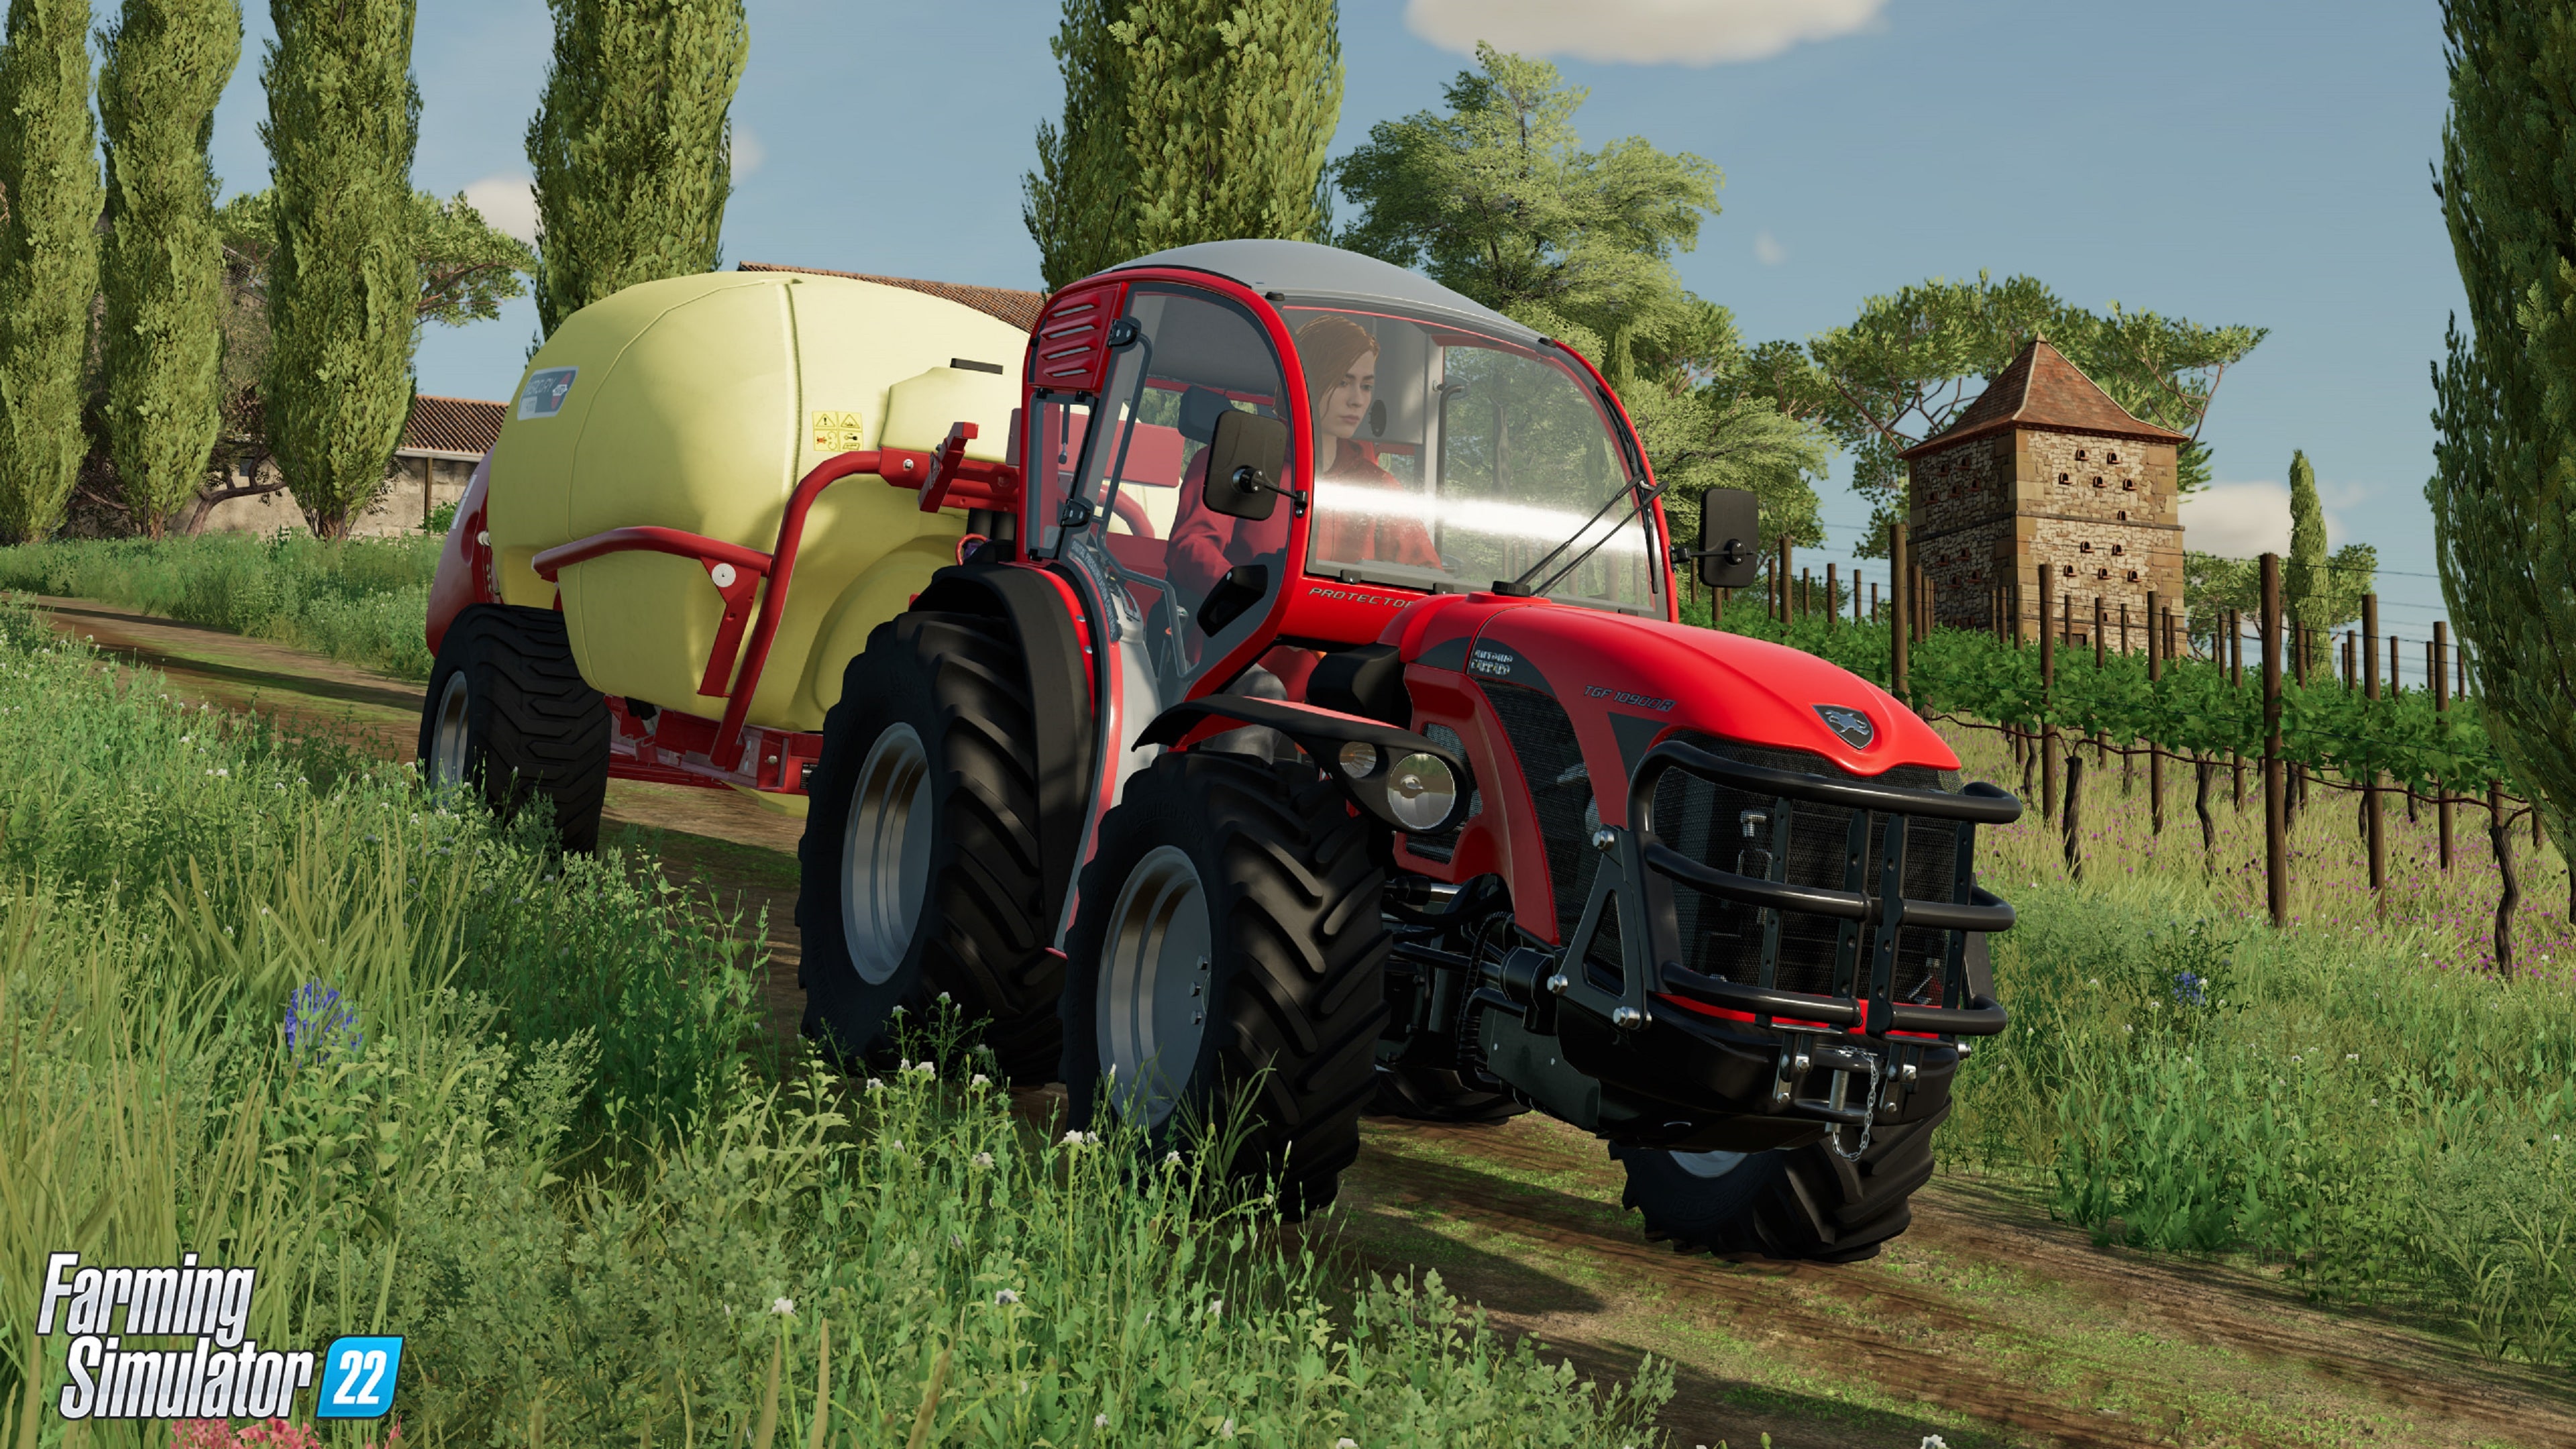 Farming Simulator 22 — Year 1 Season Pass on PS5 PS4 — price